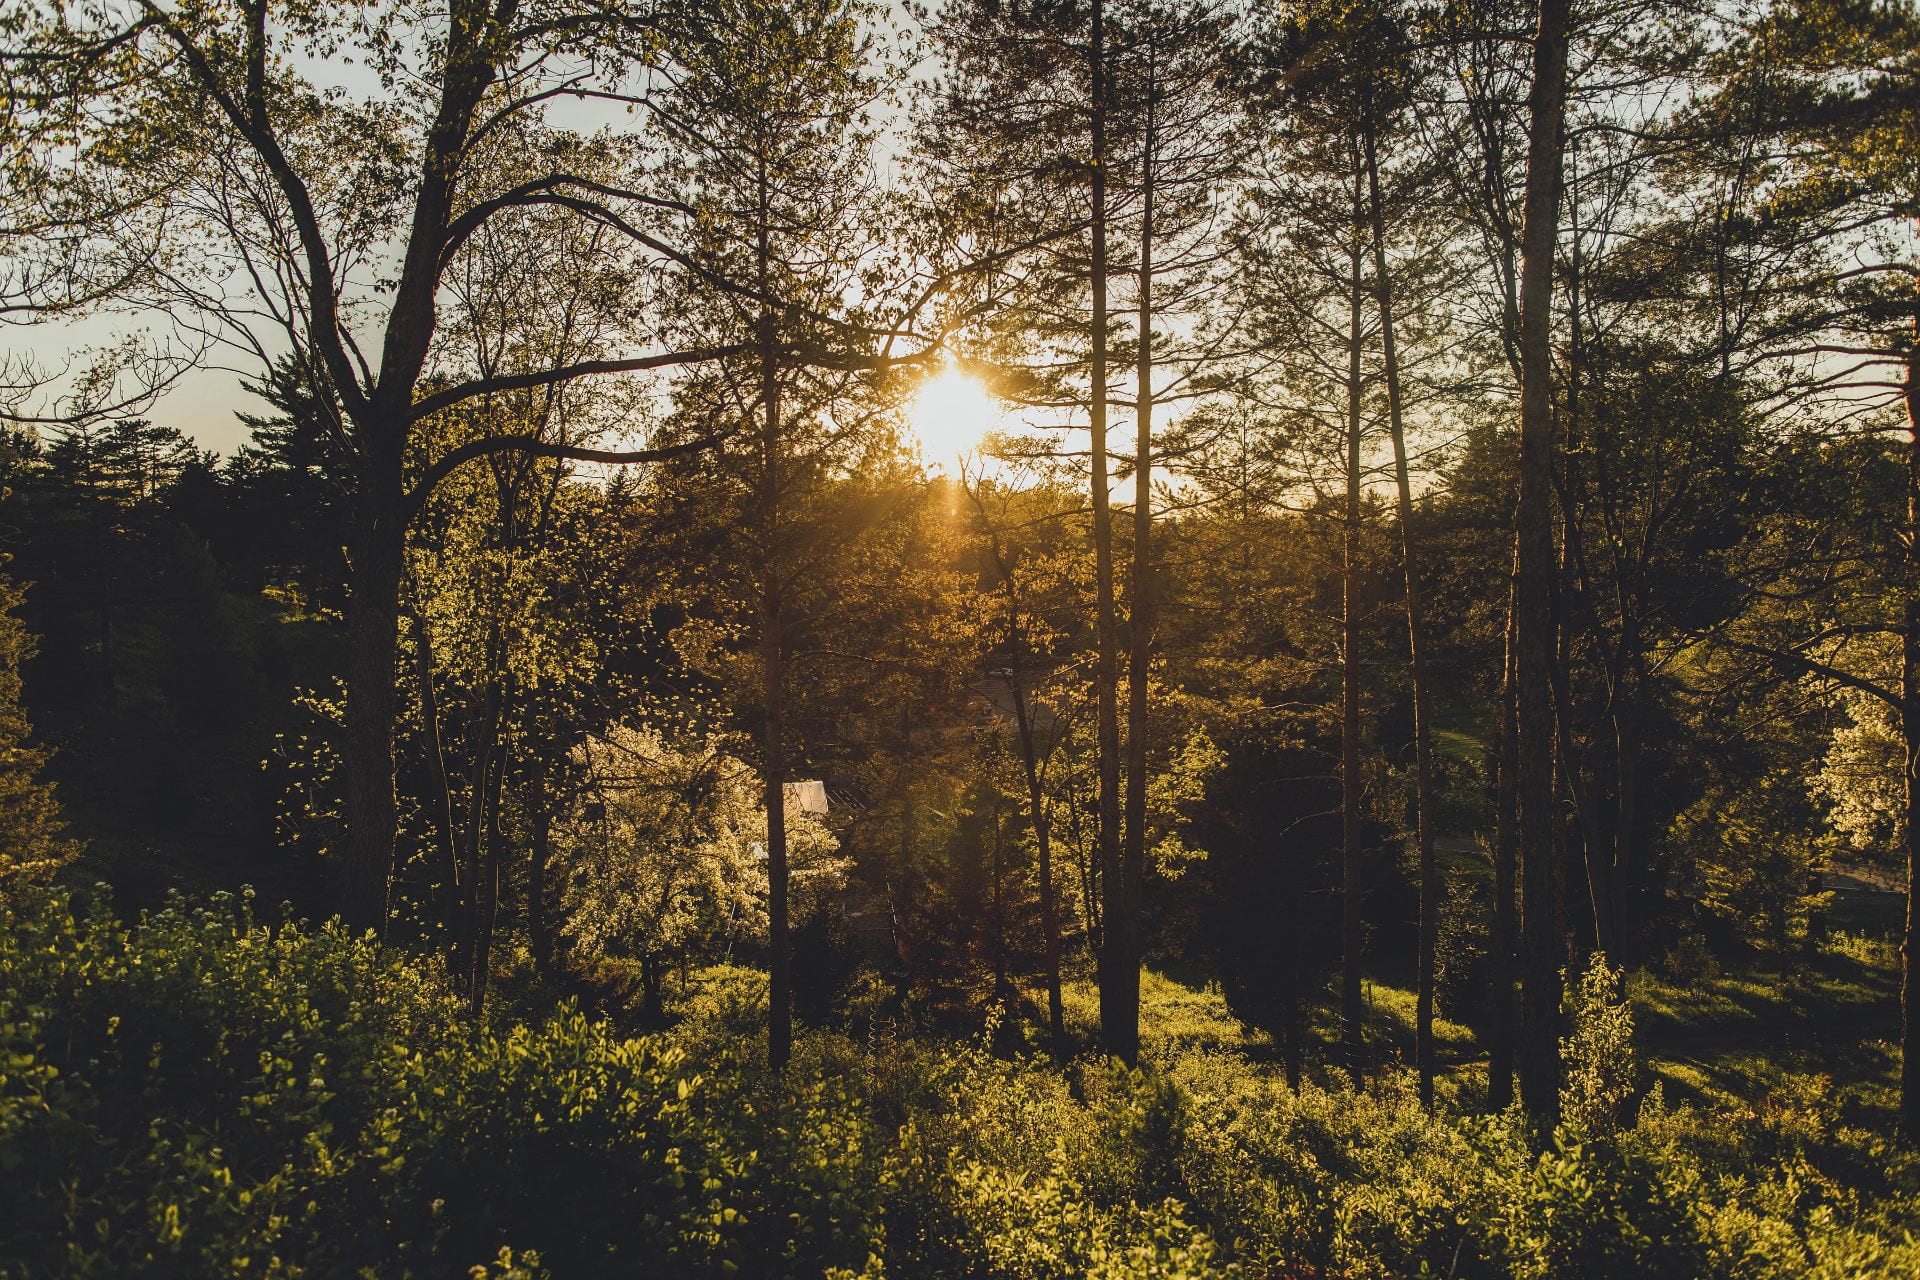 Peaceful forest scene